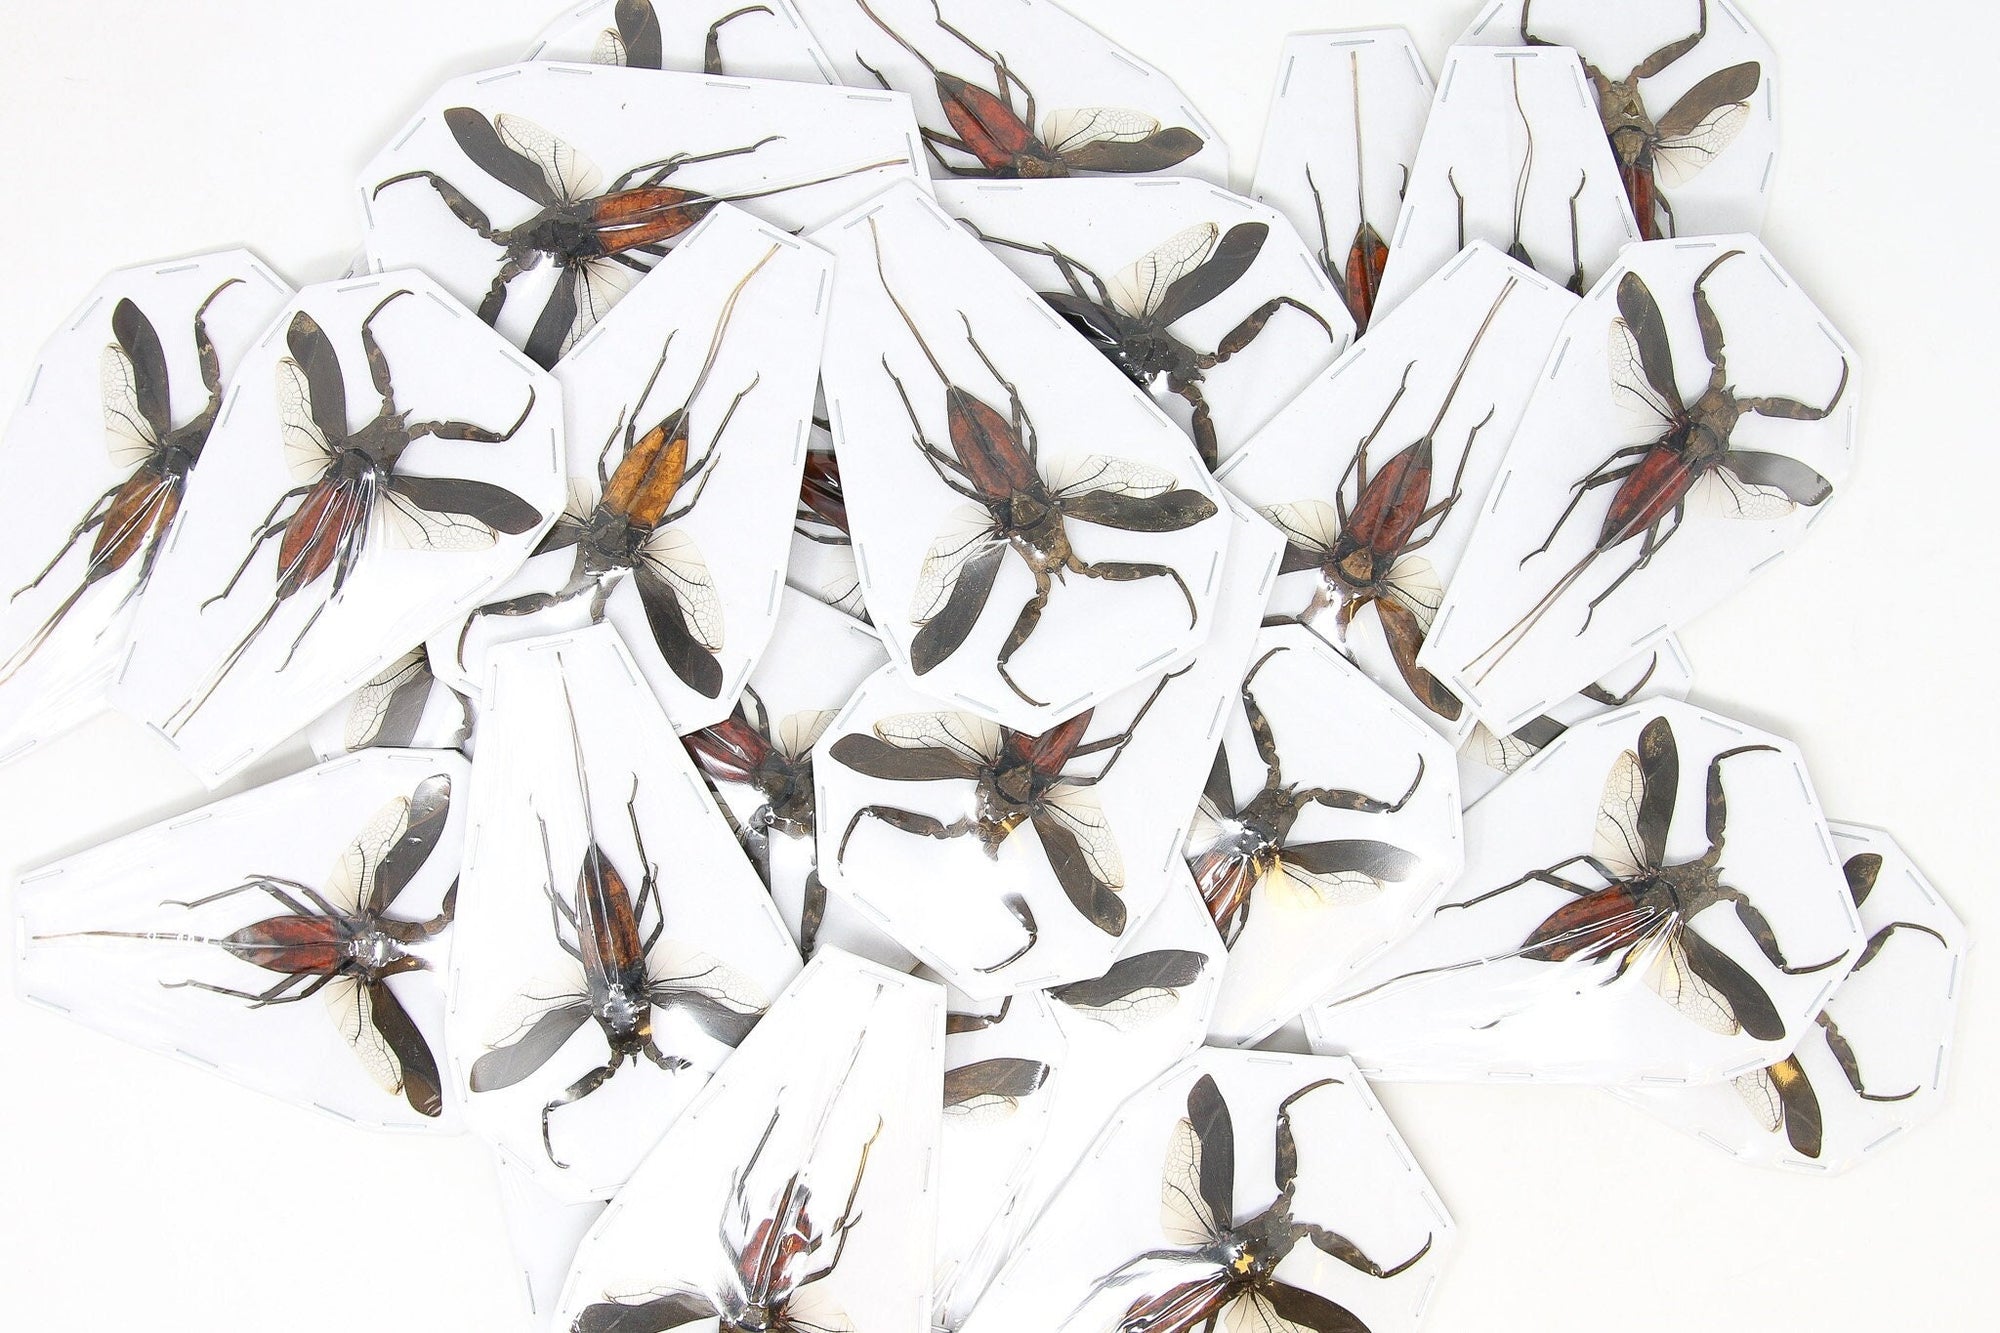 Pack of 10 Java Water Scorpions (Nepa rubra) A1 Real Dry-Preserved Hemiptera Specimens